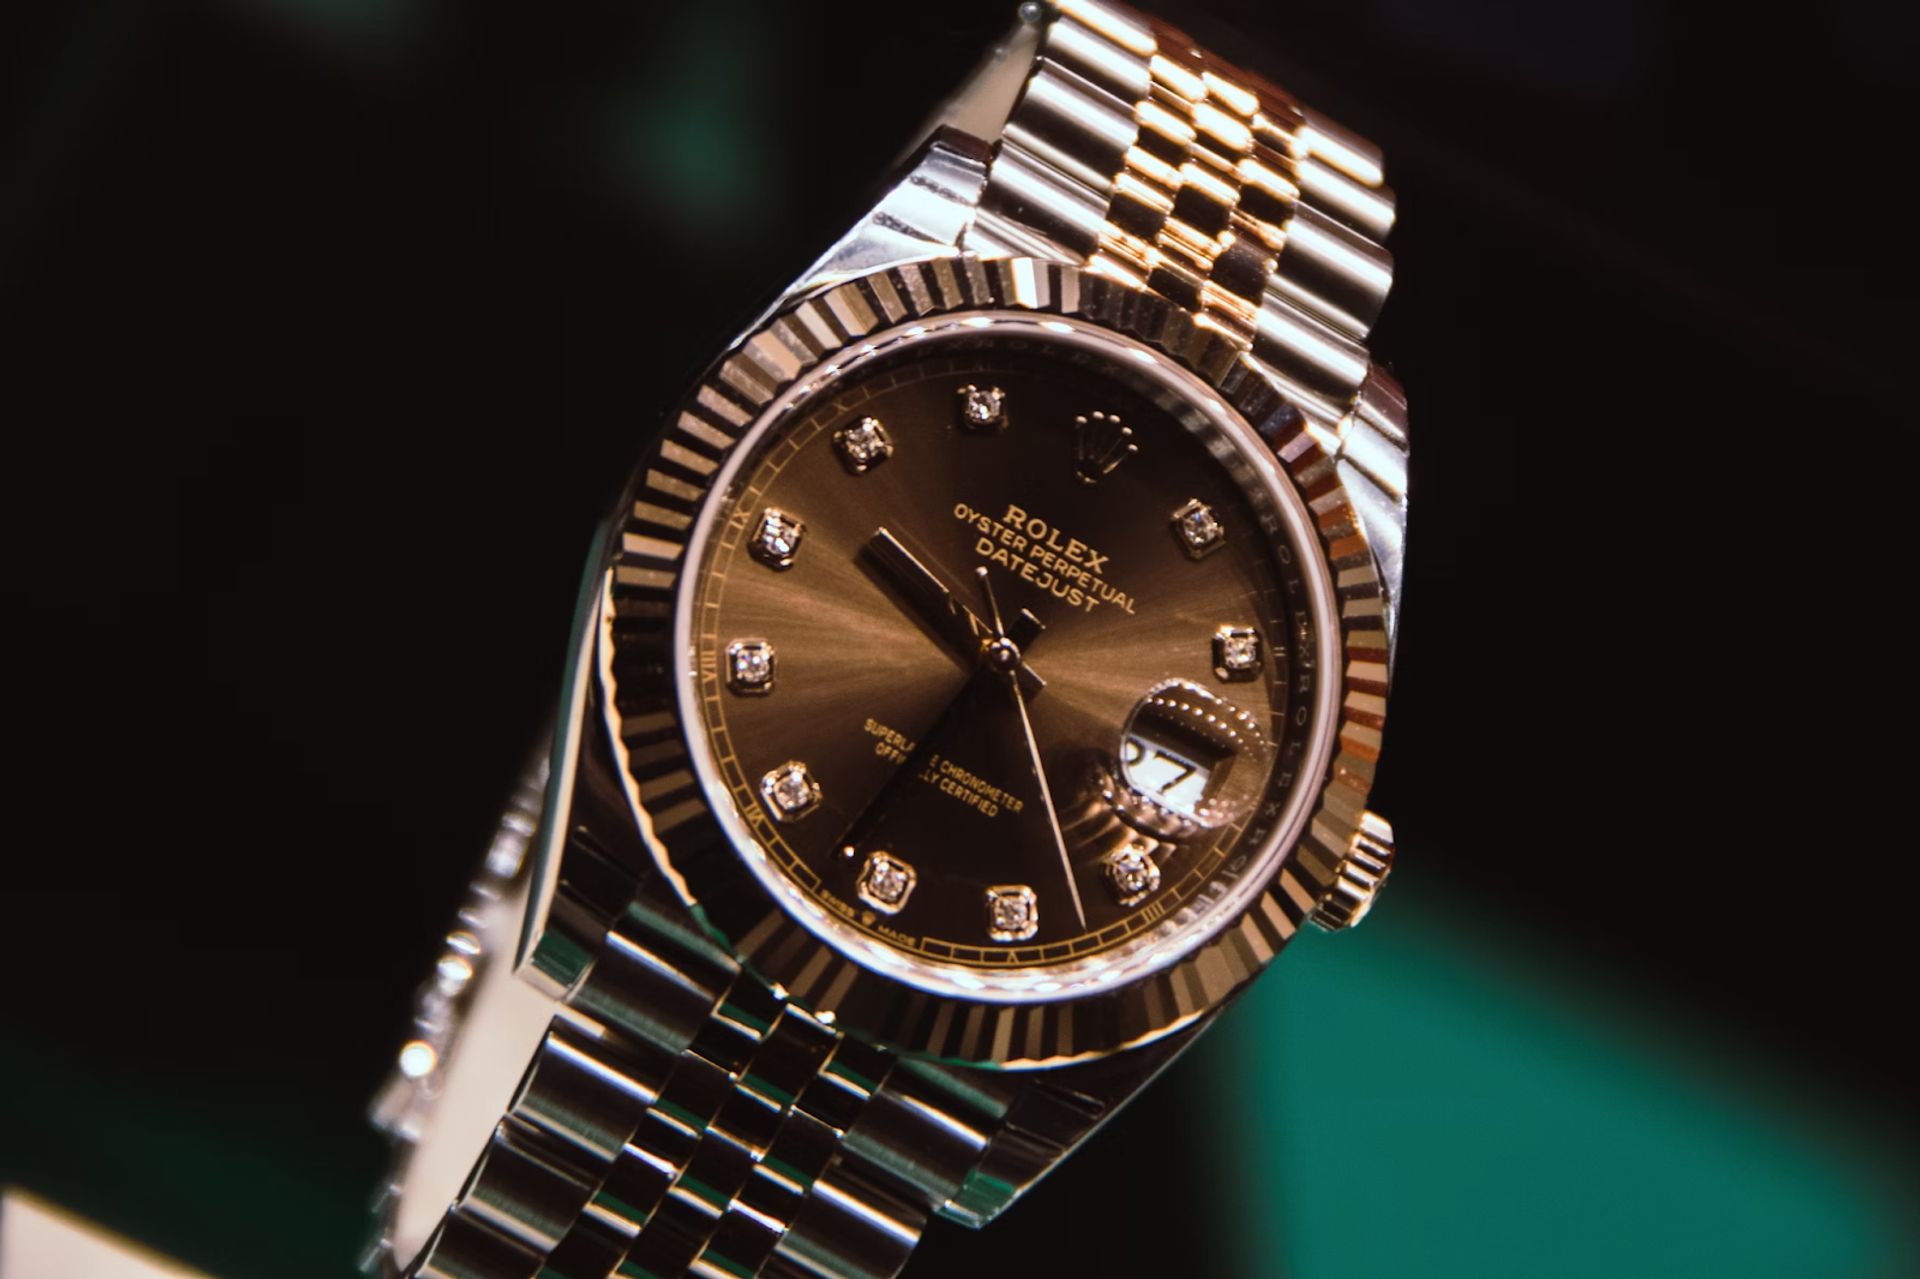 Close up of a gold Rolex watch